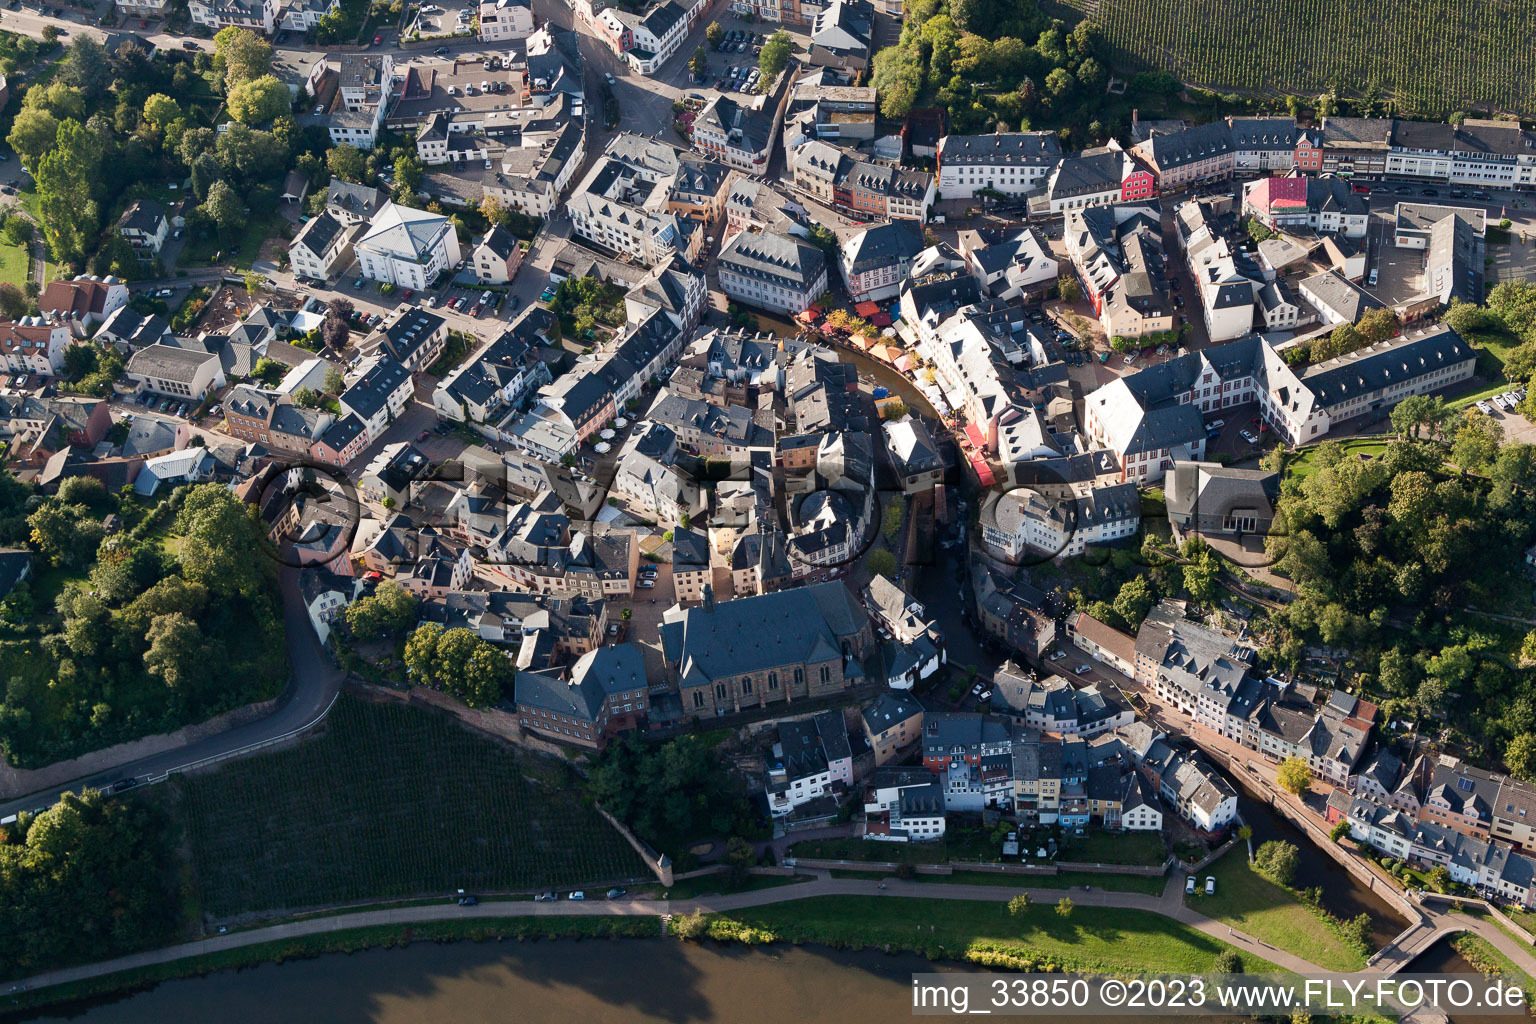 Saarburg in the state Rhineland-Palatinate, Germany viewn from the air